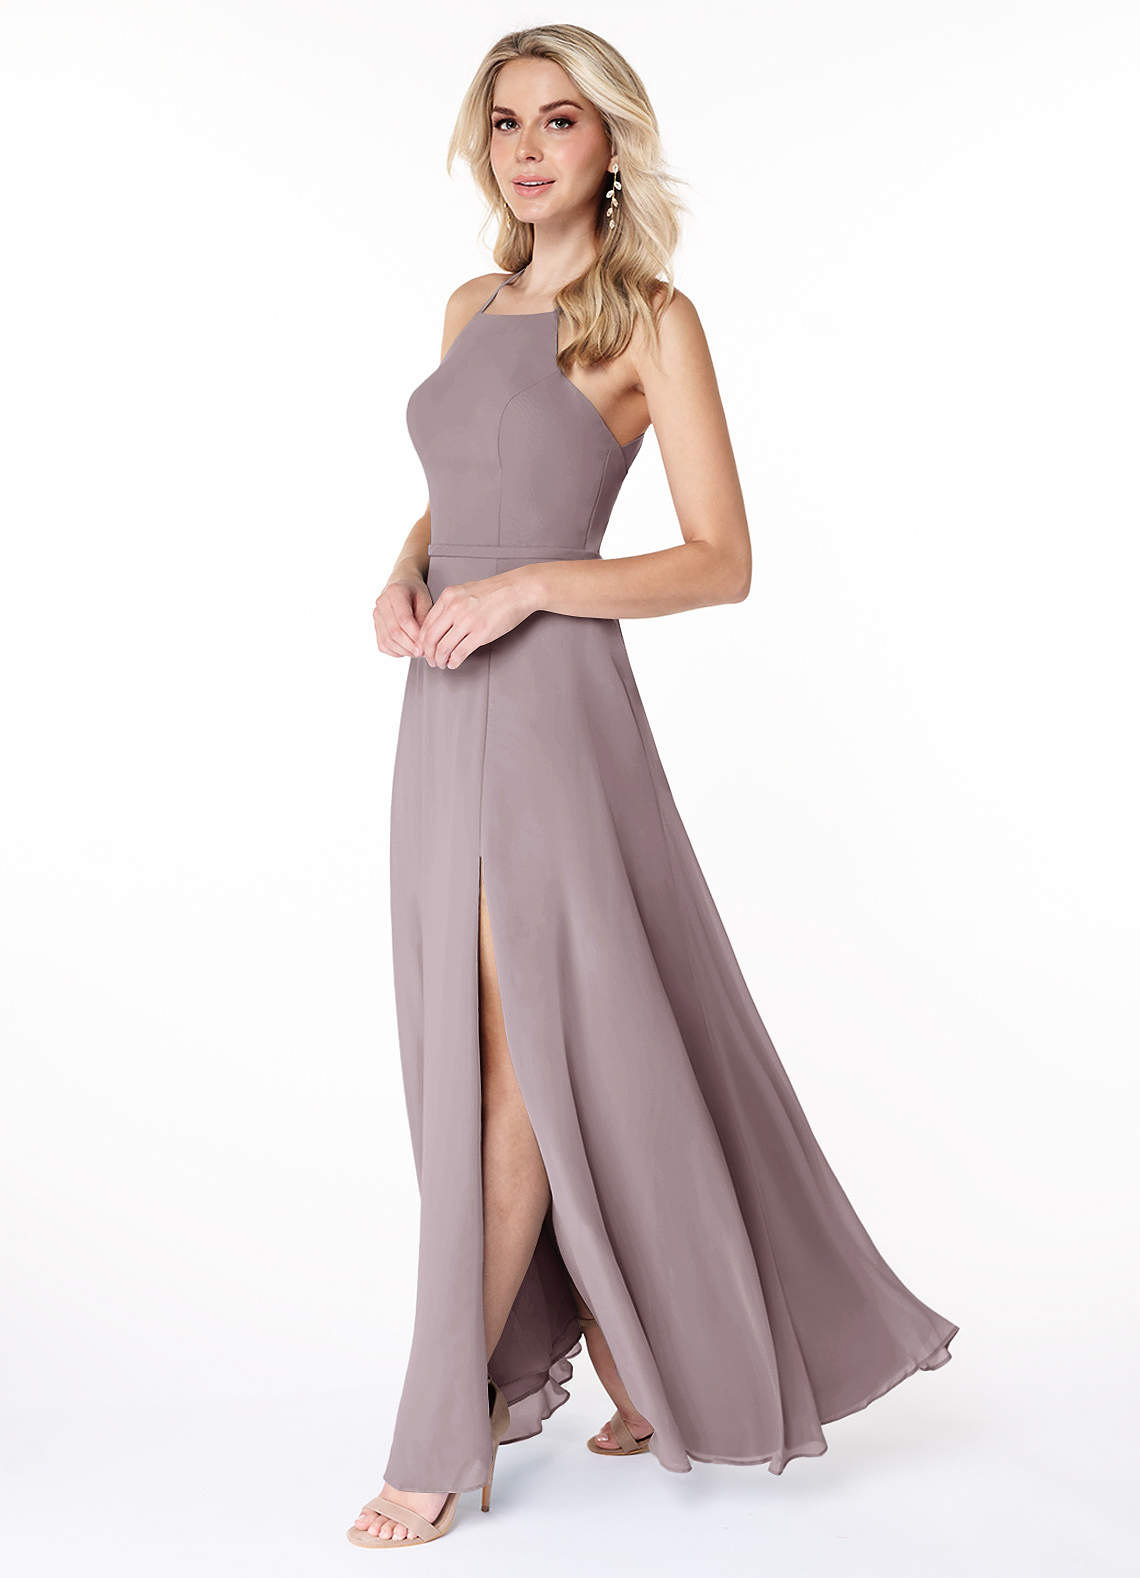 Azazie Bree Bridesmaid Dresses A-Line Side Slit Chiffon Floor-Length Dress image1